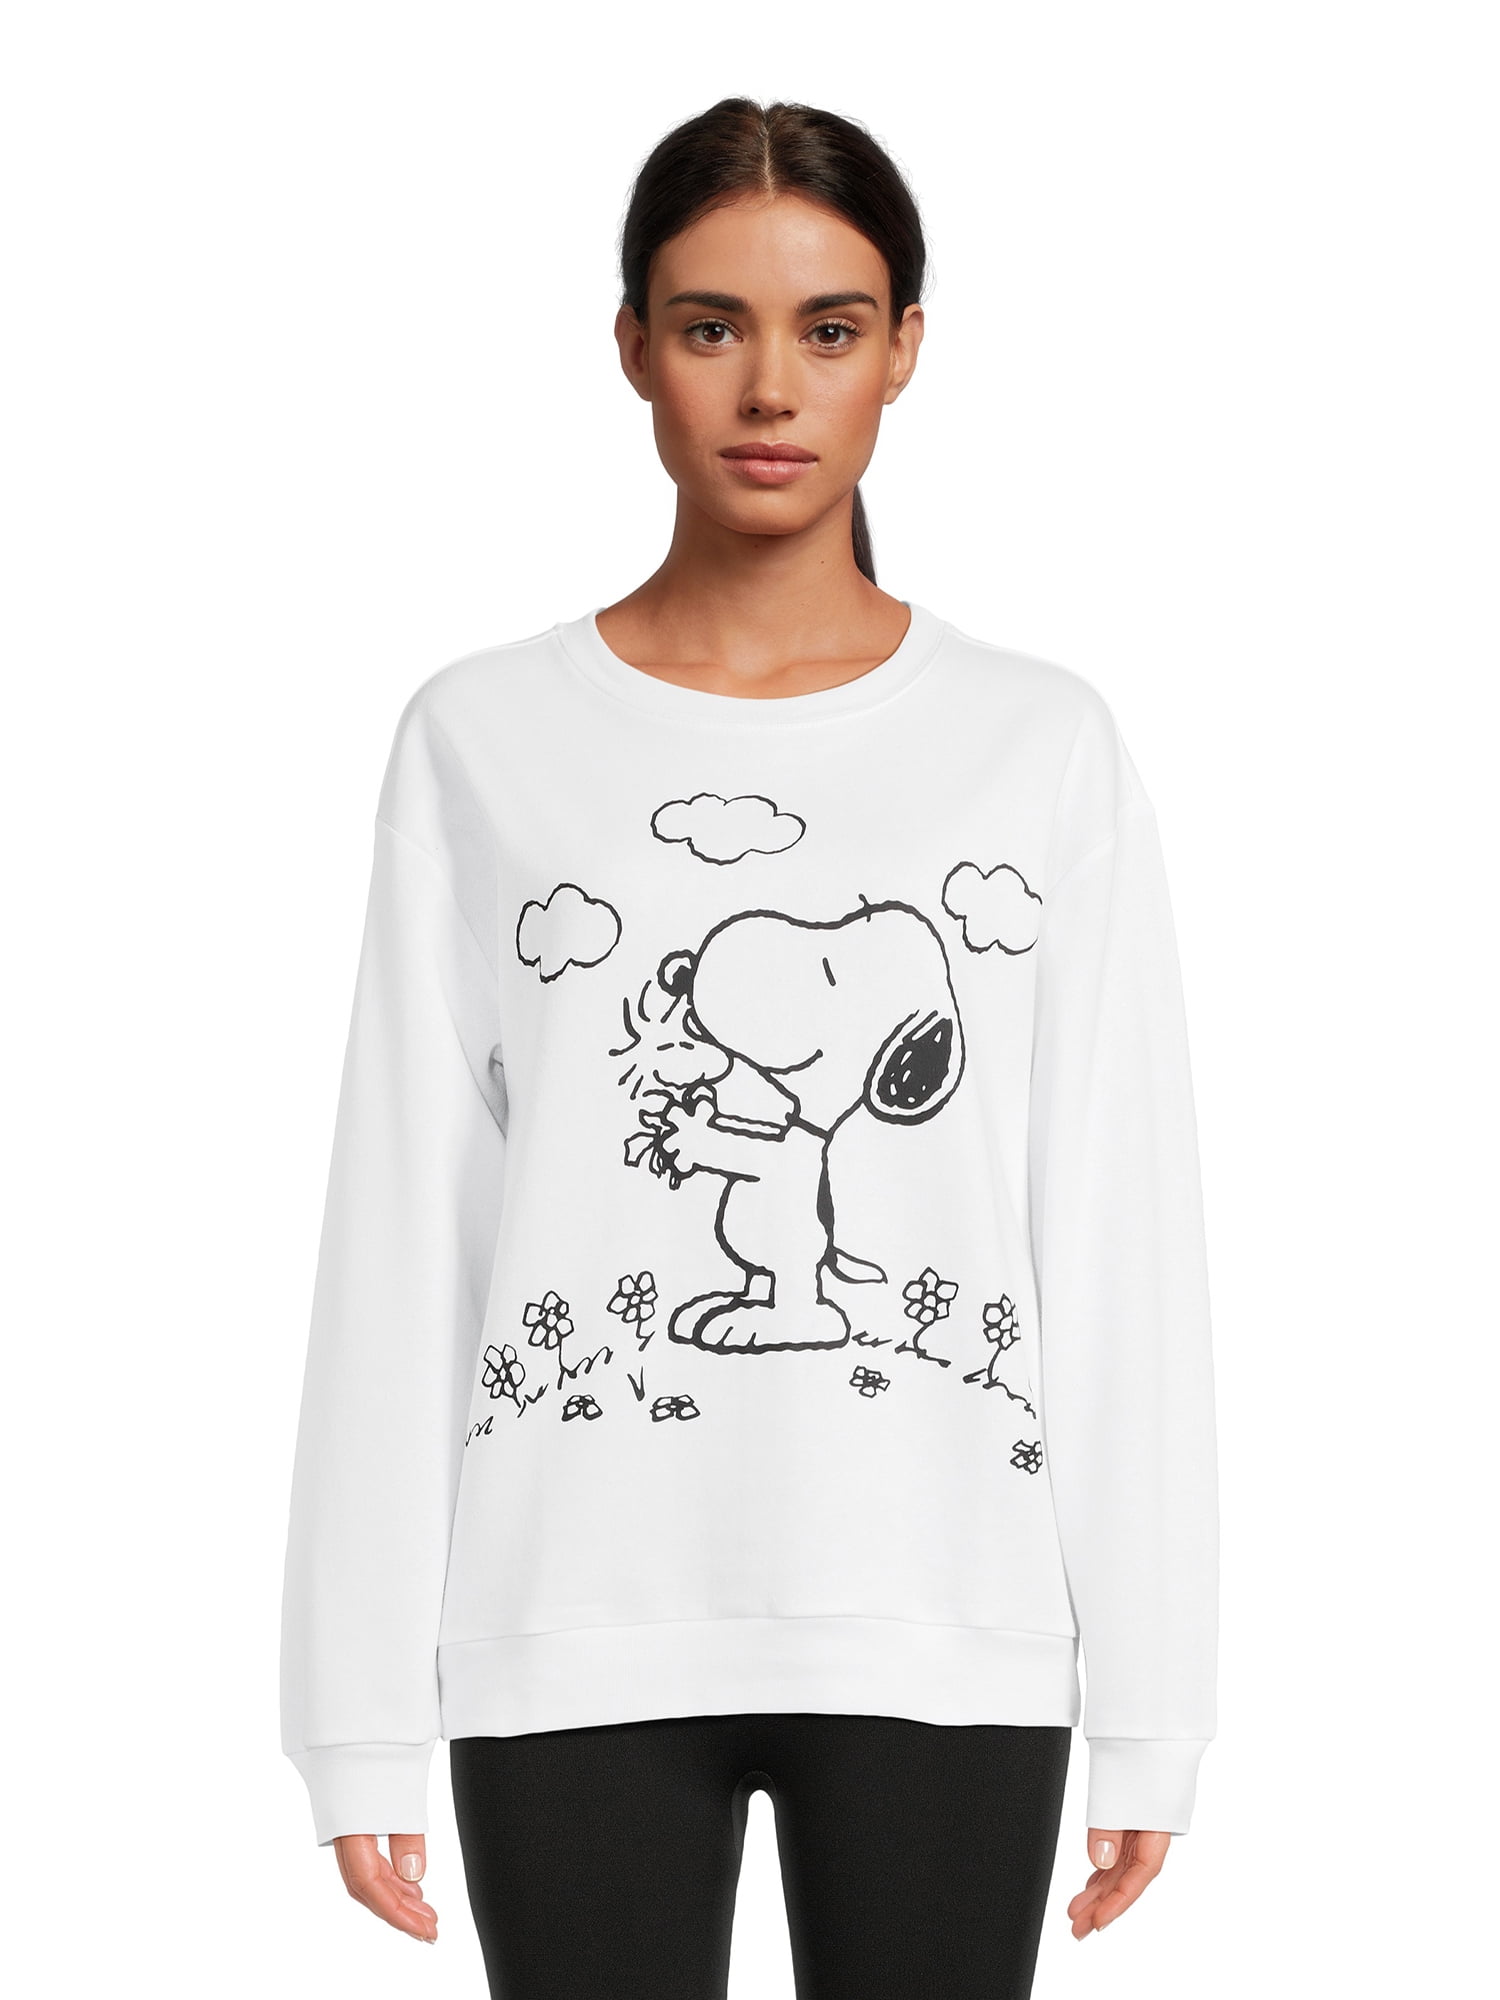 Snoopy Women's Sweatshirt with Long Sleeves - Walmart.com